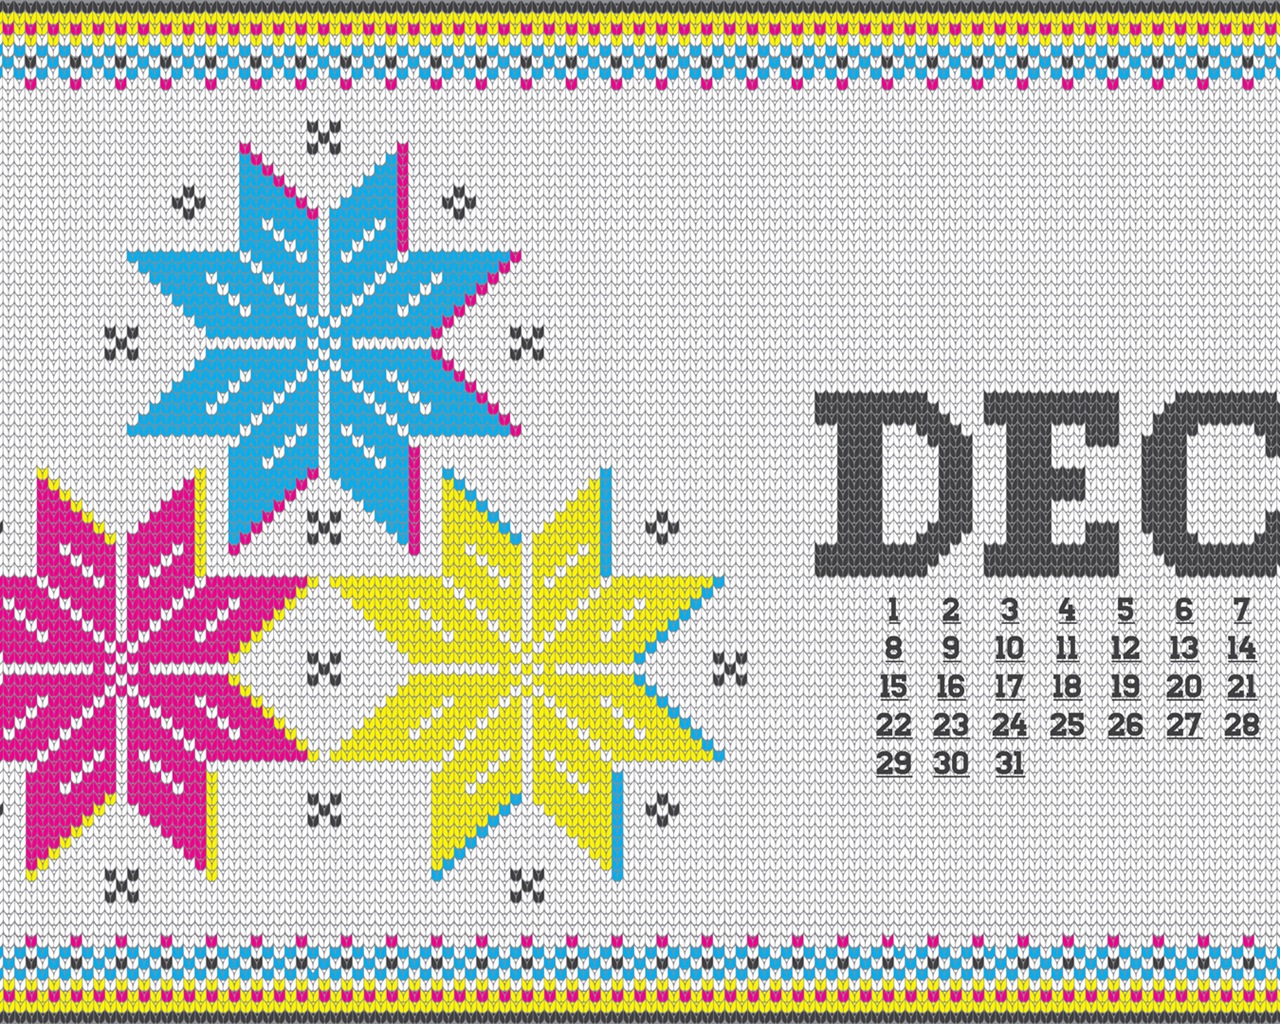 Dezember 2013 Kalender Wallpaper (1) #3 - 1280x1024